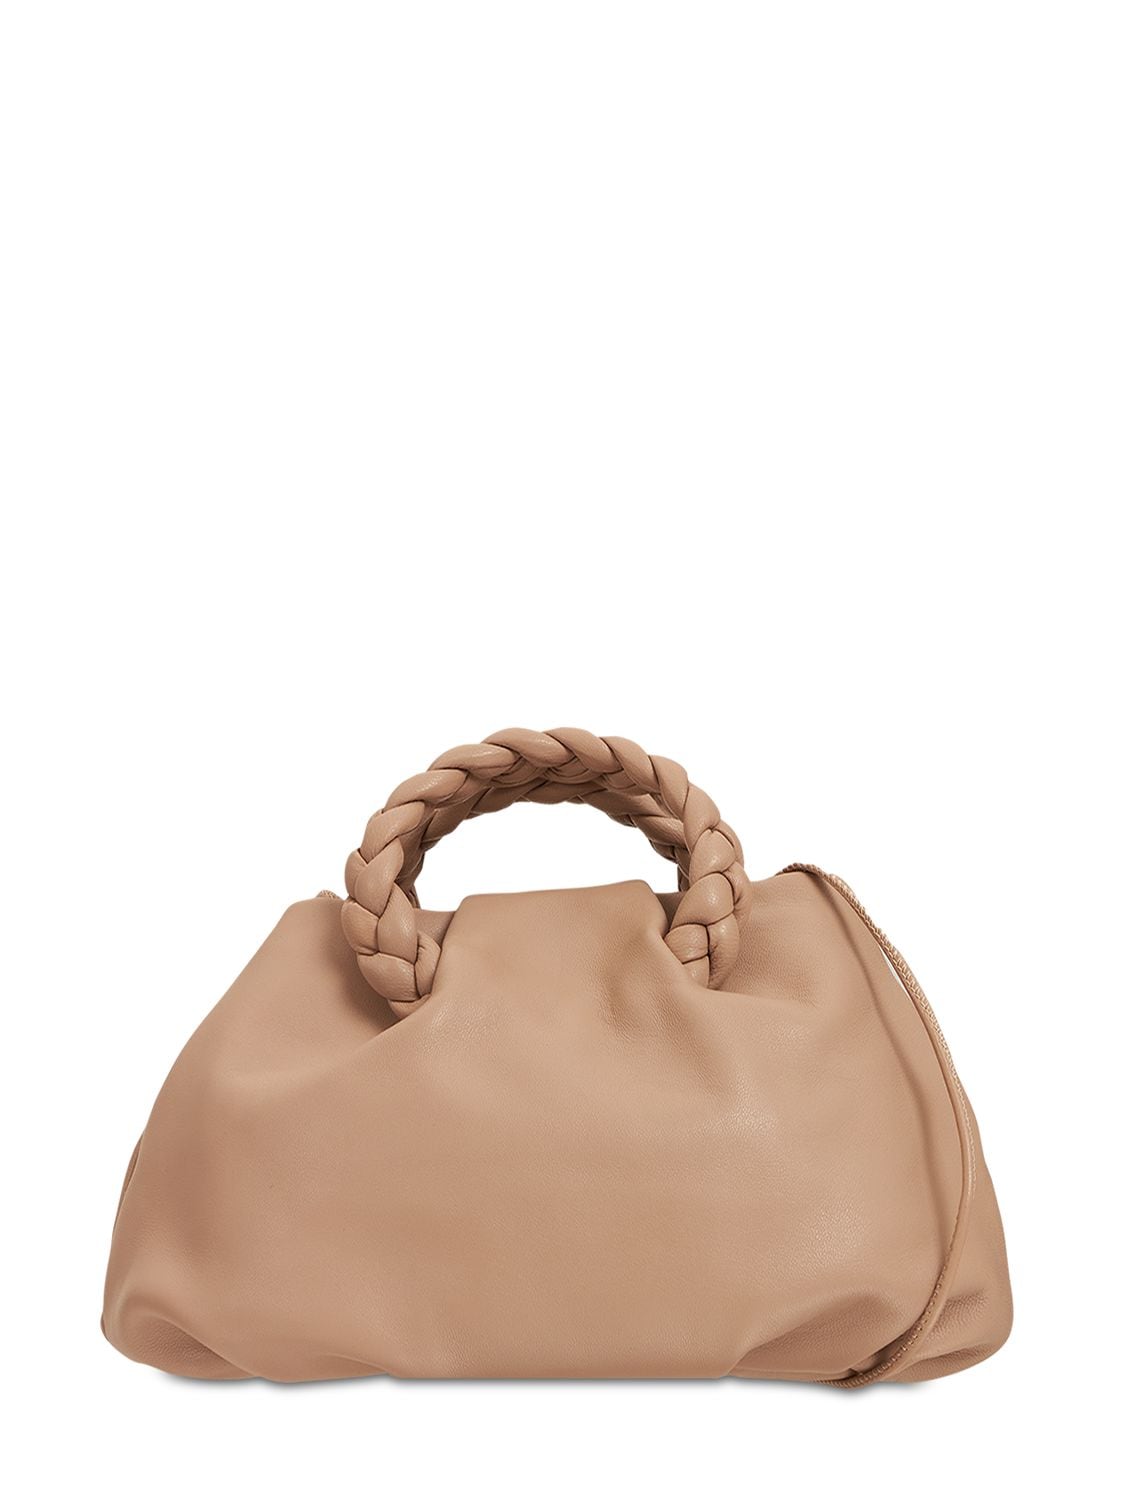 Bombon Leather Top Handle Bag